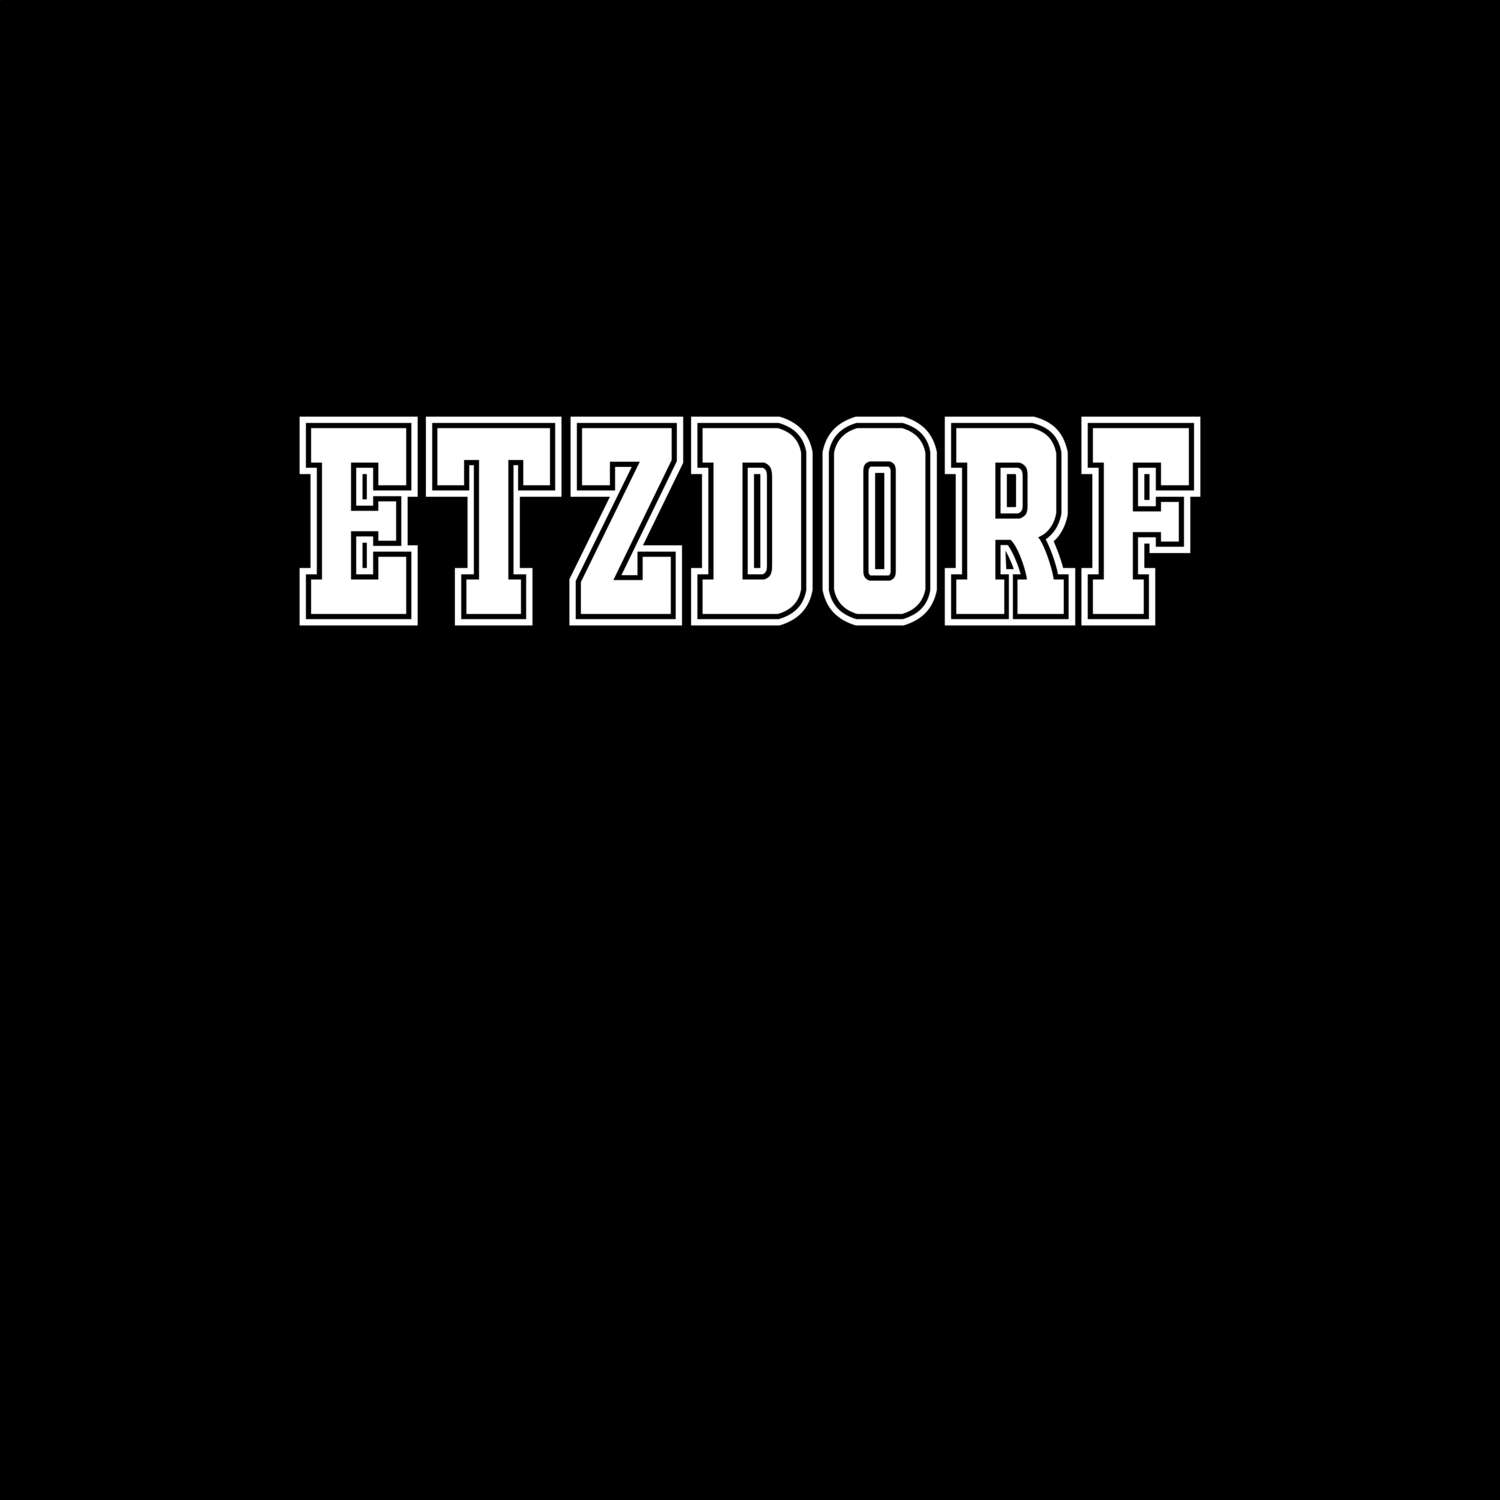 Etzdorf T-Shirt »Classic«